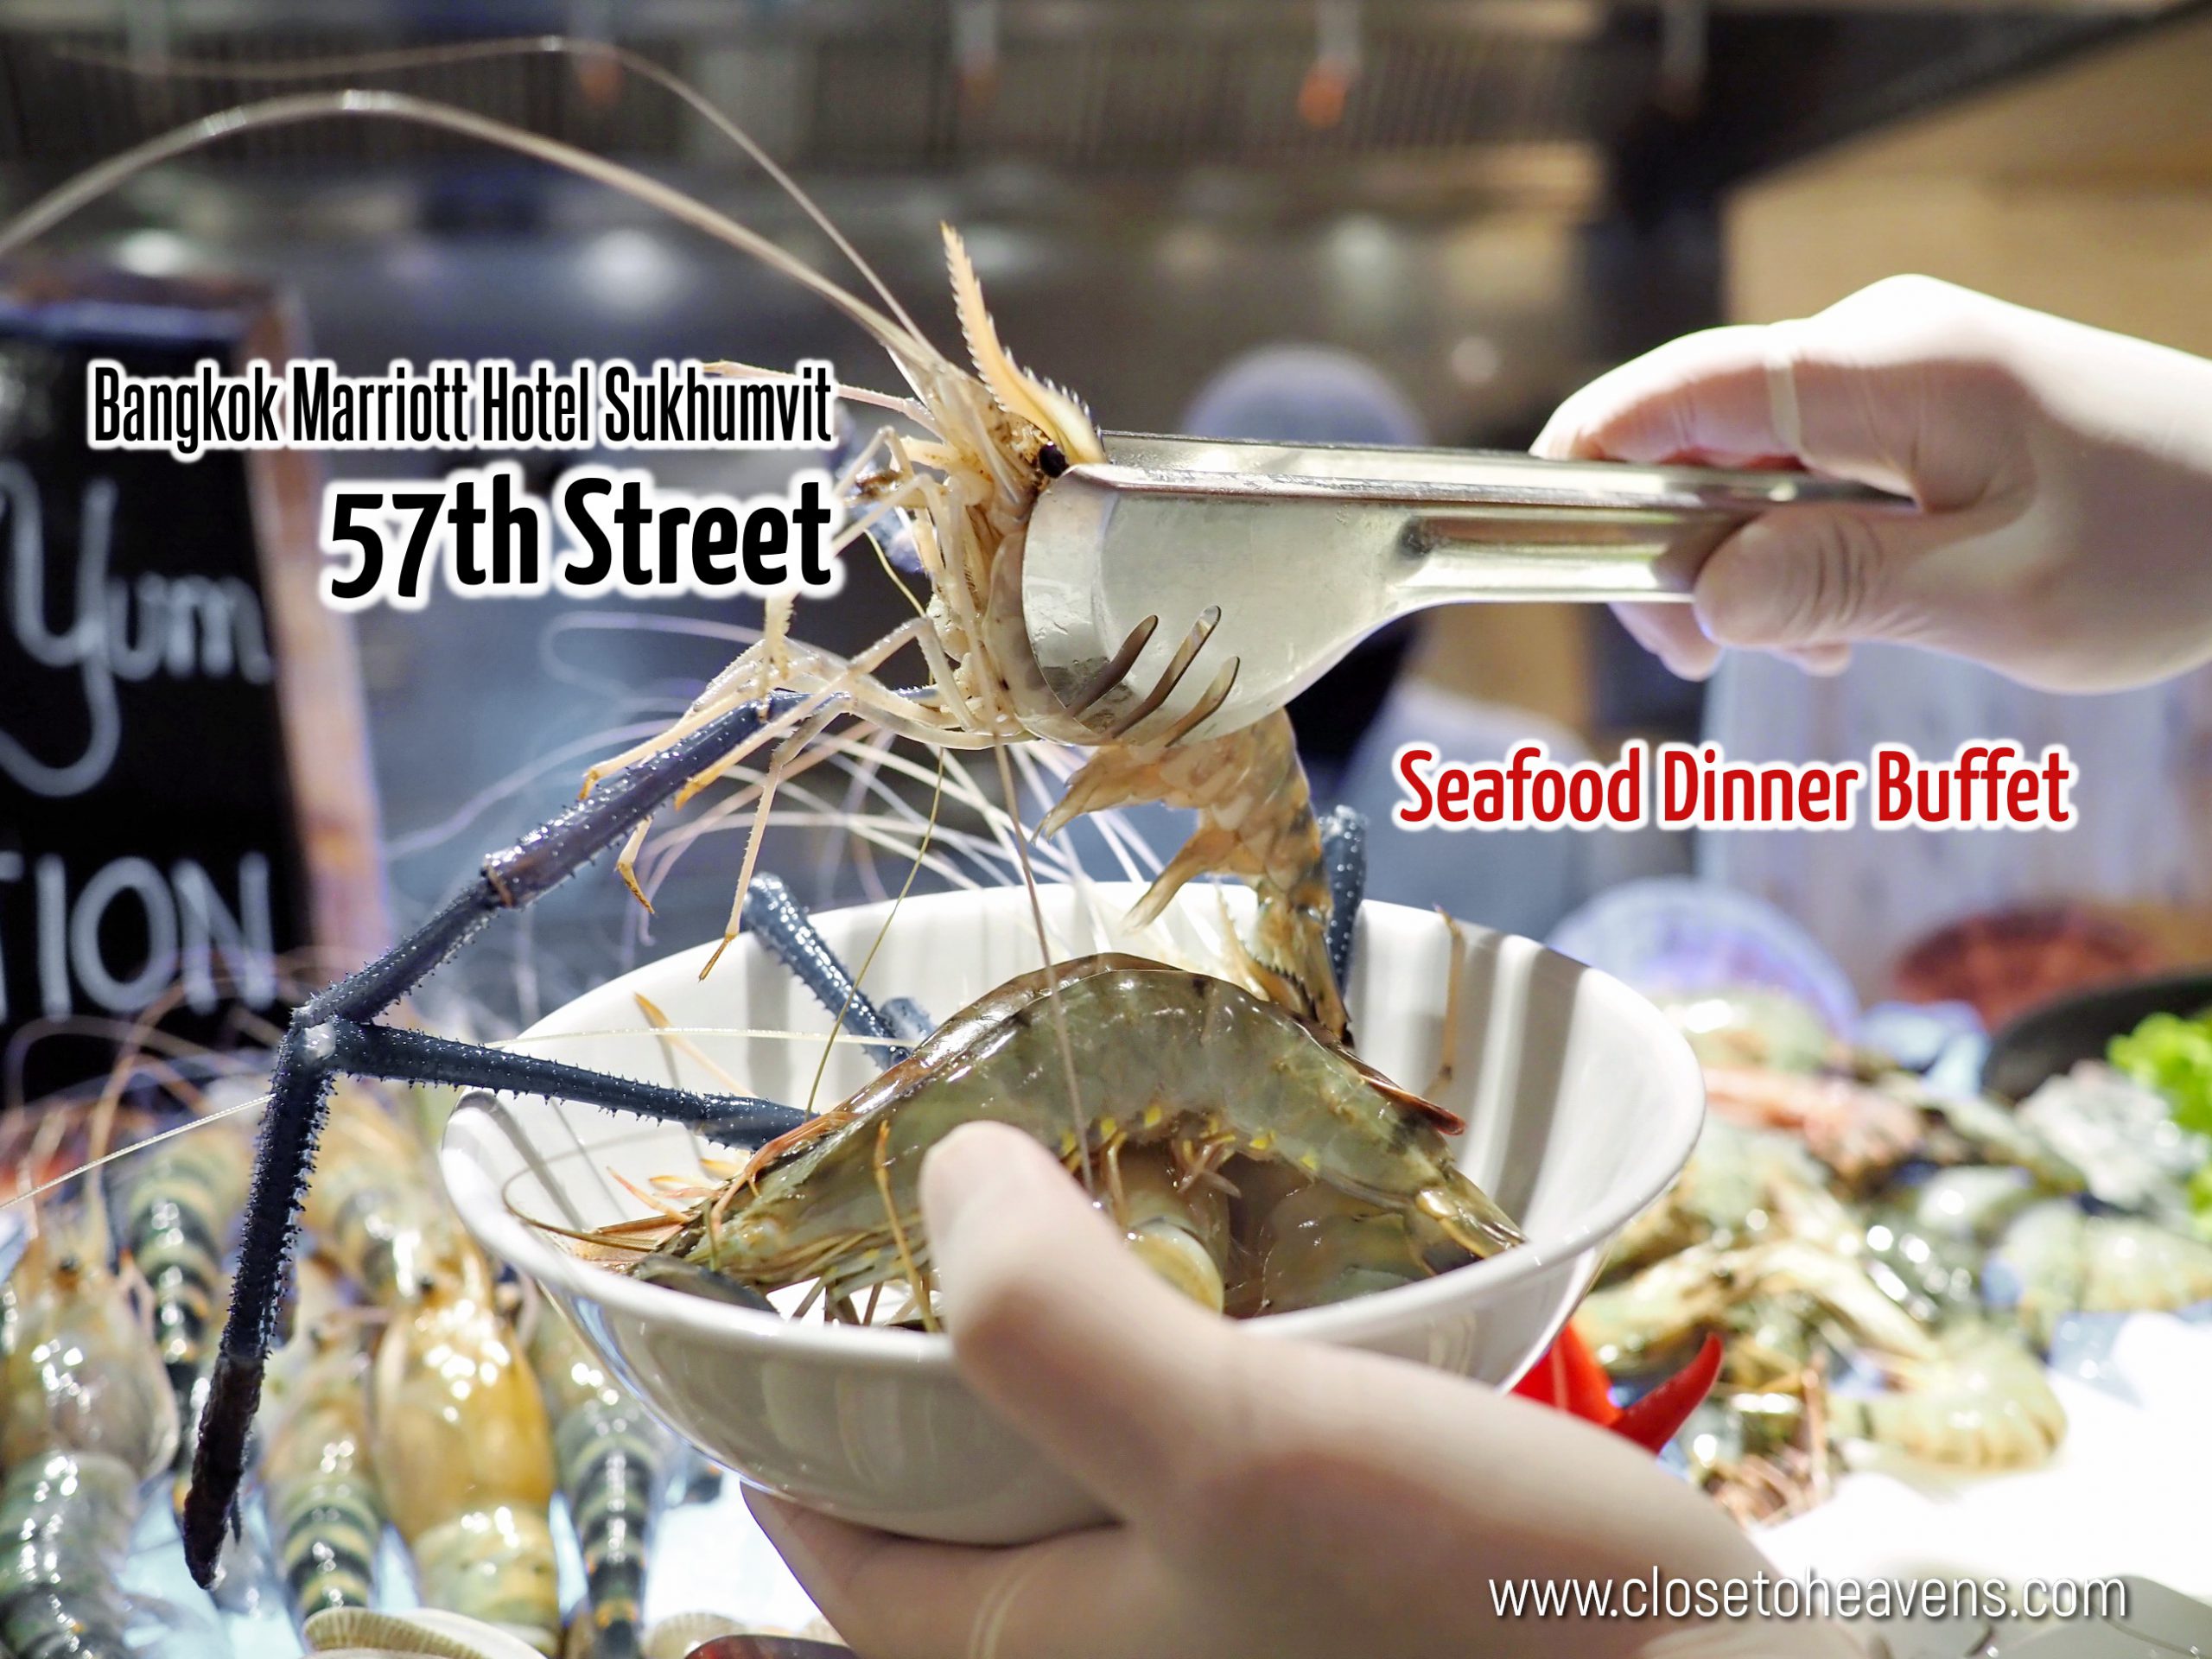 Seafood Dinner Buffet | 57th Street Bangkok Marriott Hotel Sukhumvit